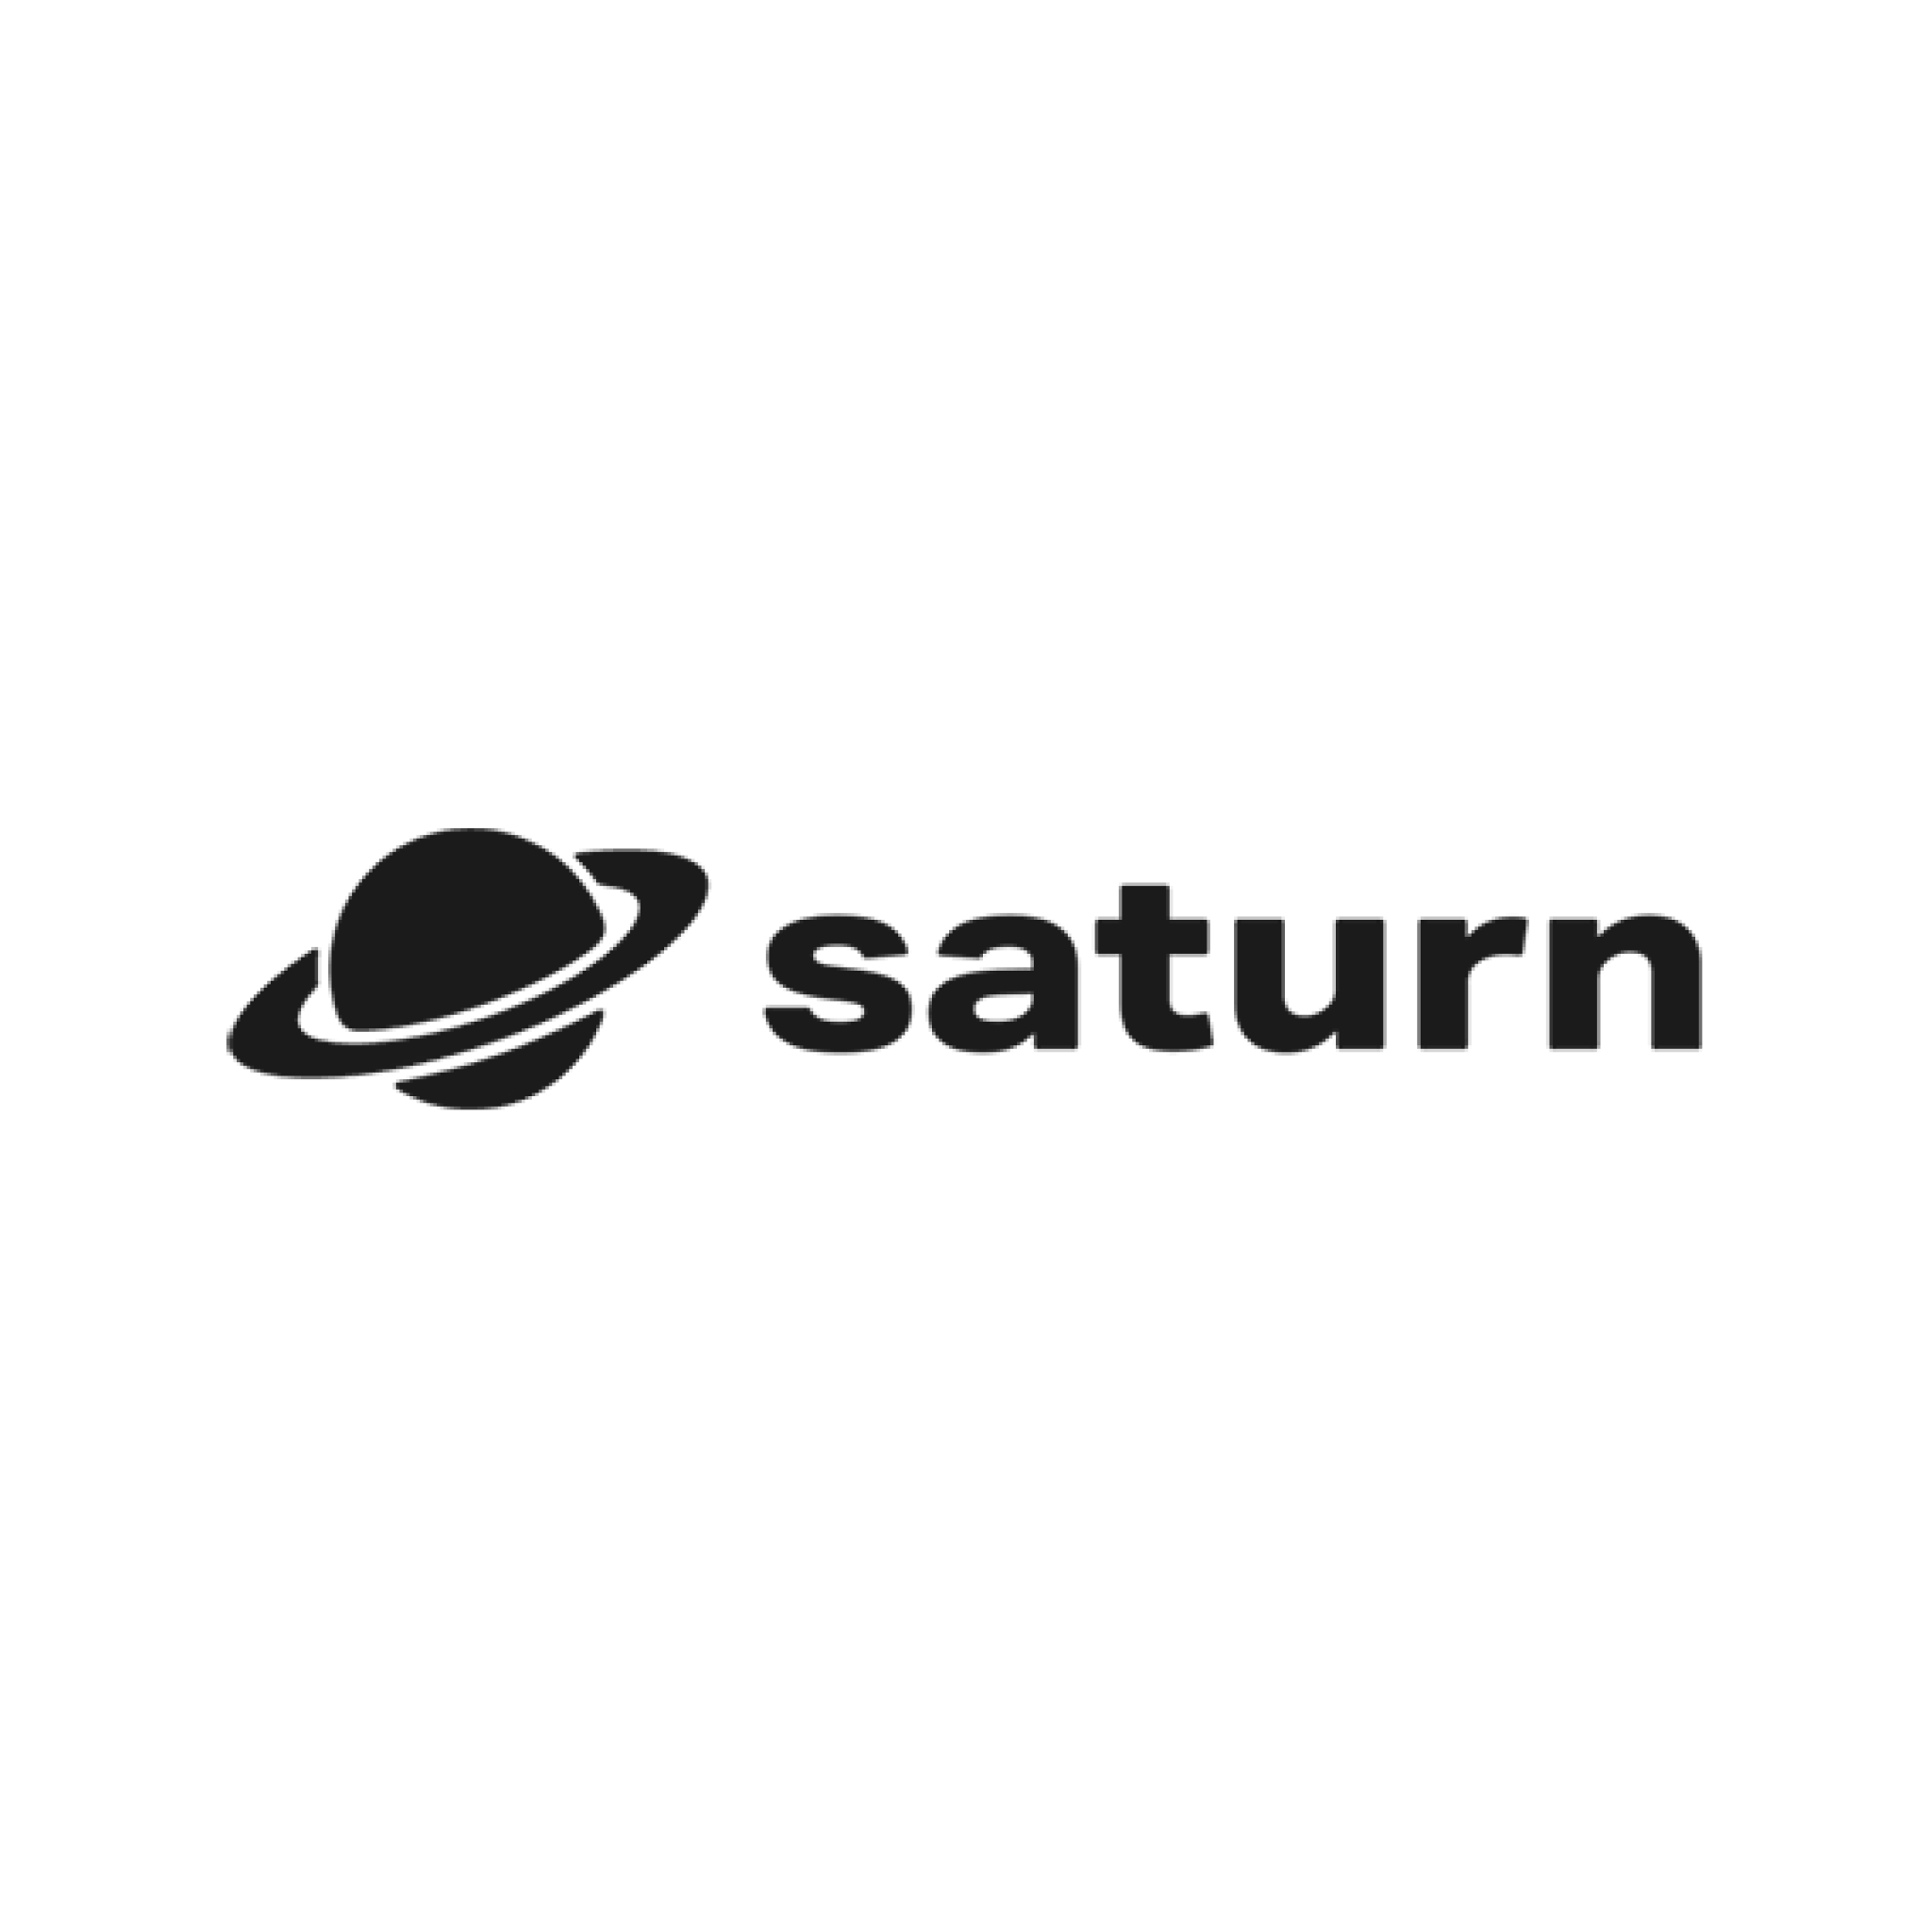 Saturn export.png